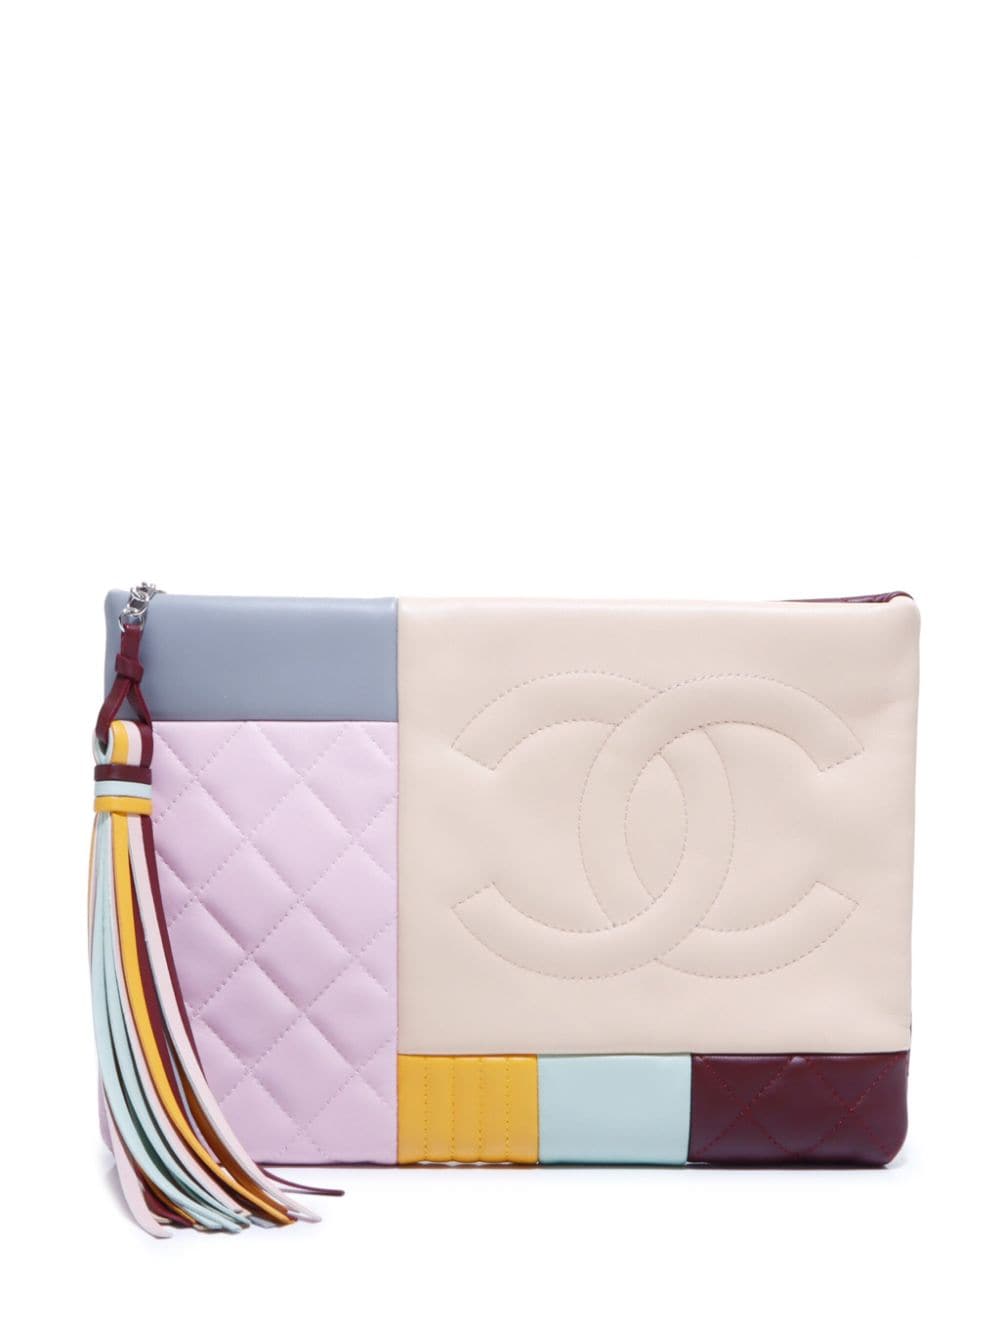 2016 O-Case patchwork clutch bag